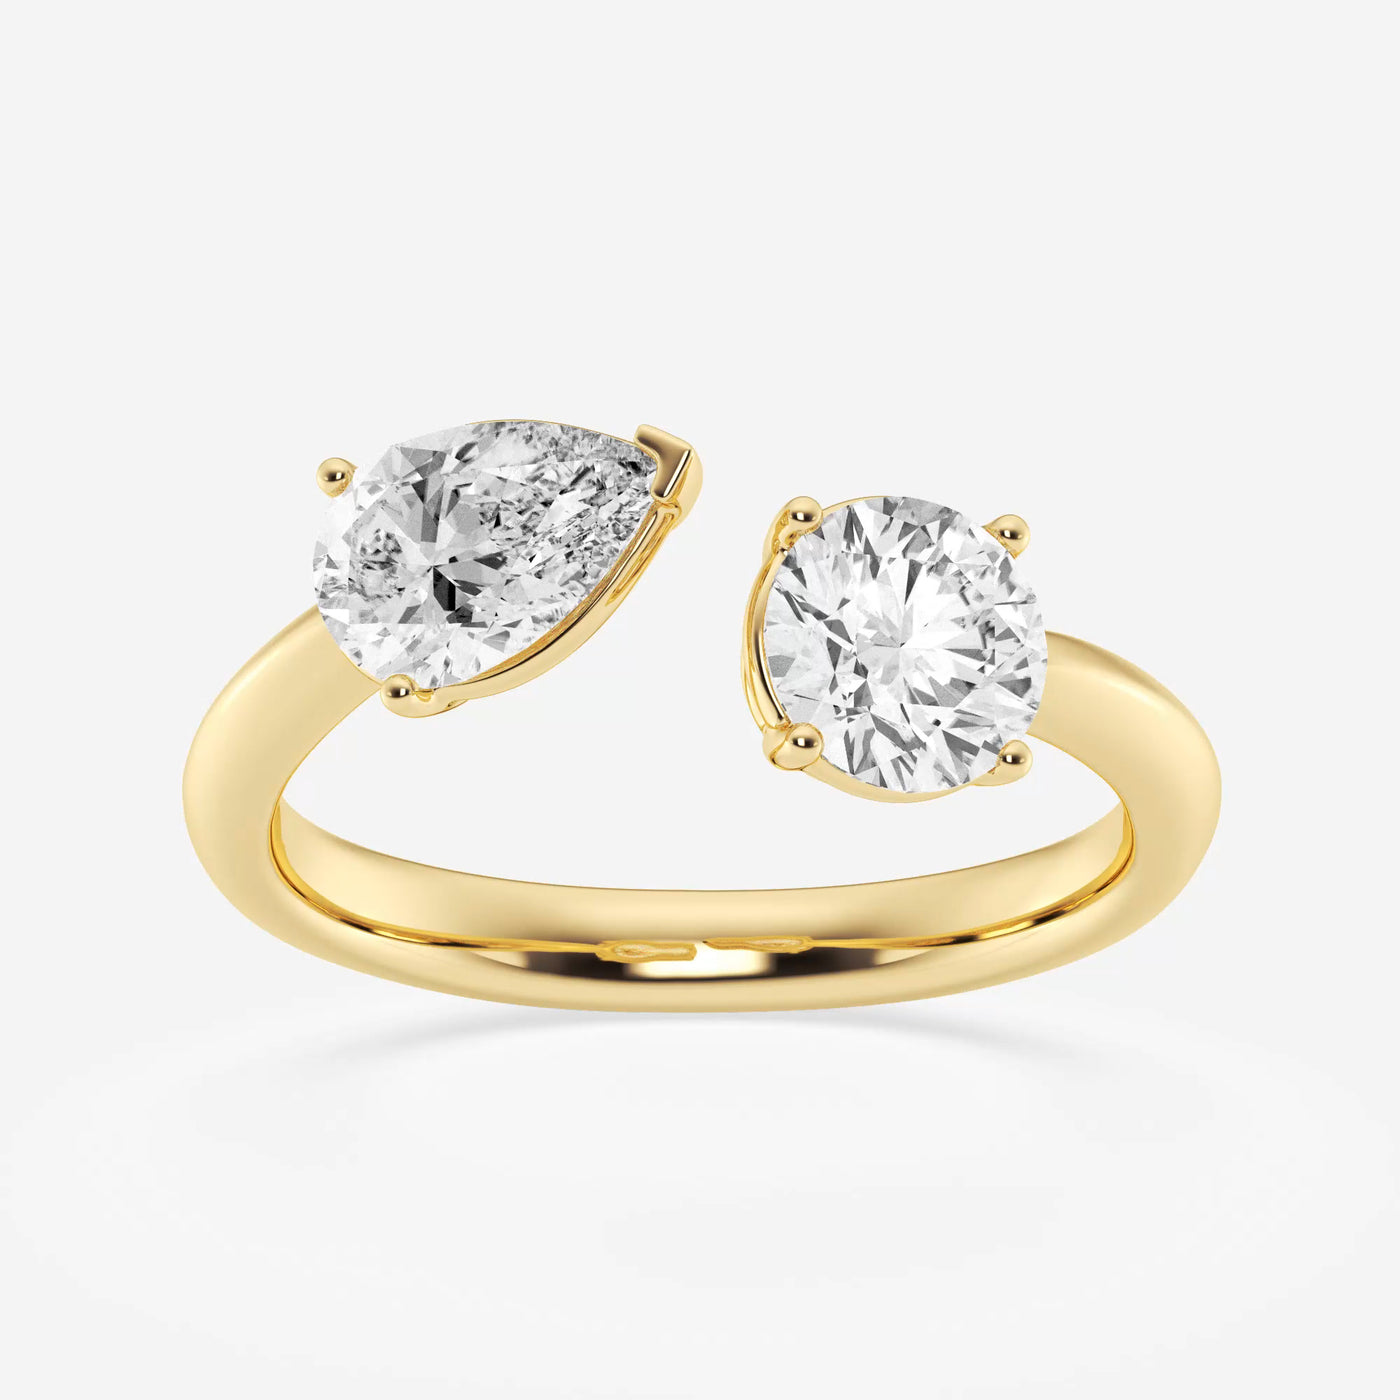 _main_image@SKU:LGD-TXR01121-GY4~#carat_1.50#diamond-quality_fg,-vs2+#metal_18k-yellow-gold